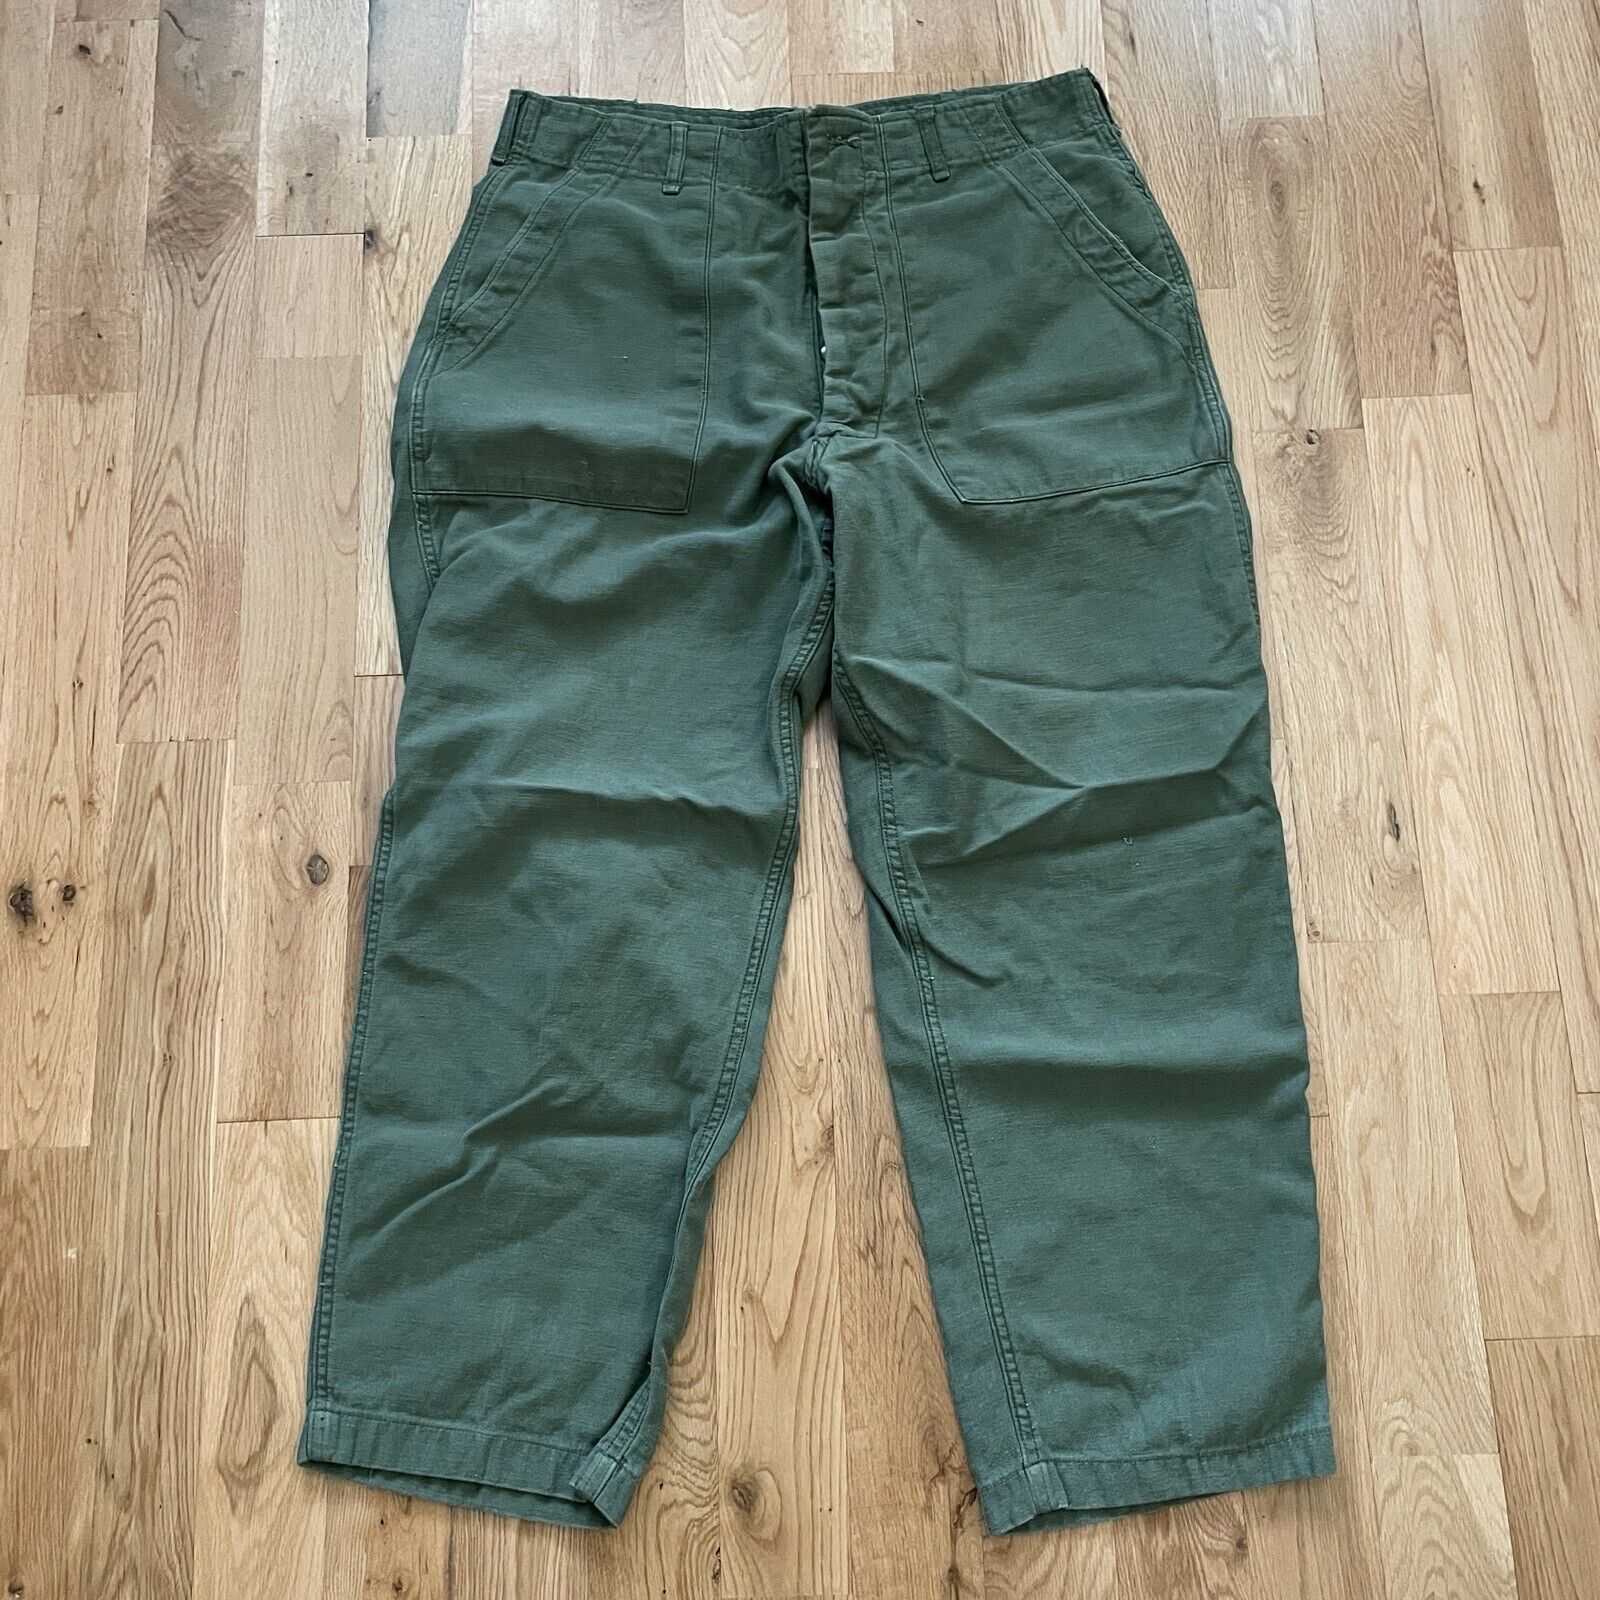 Vintage OG-107 Vietnam War Sateen Field Trousers Pants Size 32x26 Missing Button